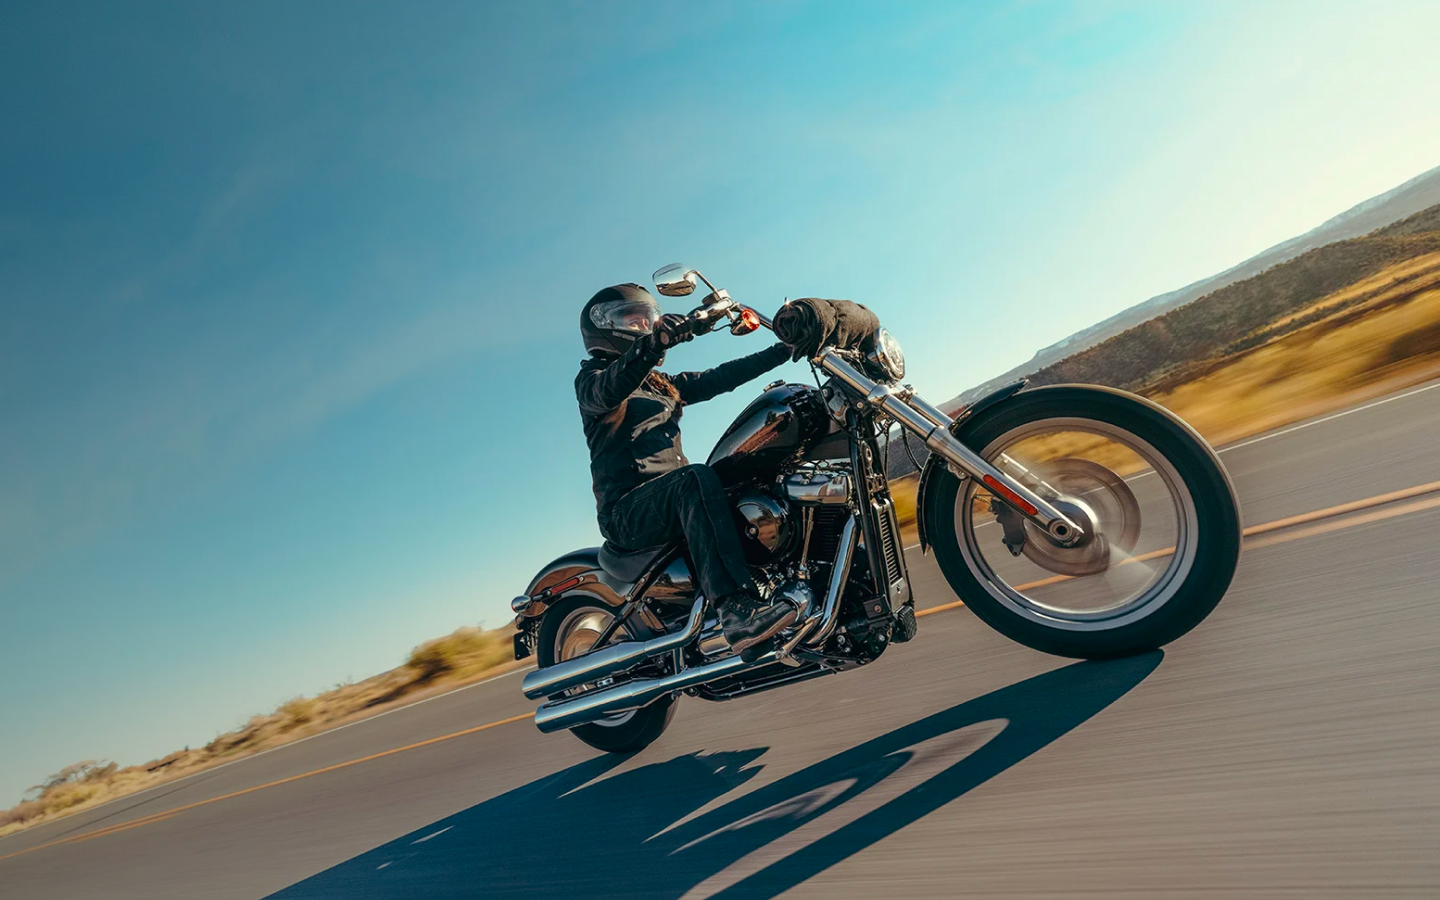 Harley Davidson Motorbike Insurance - standard and modified